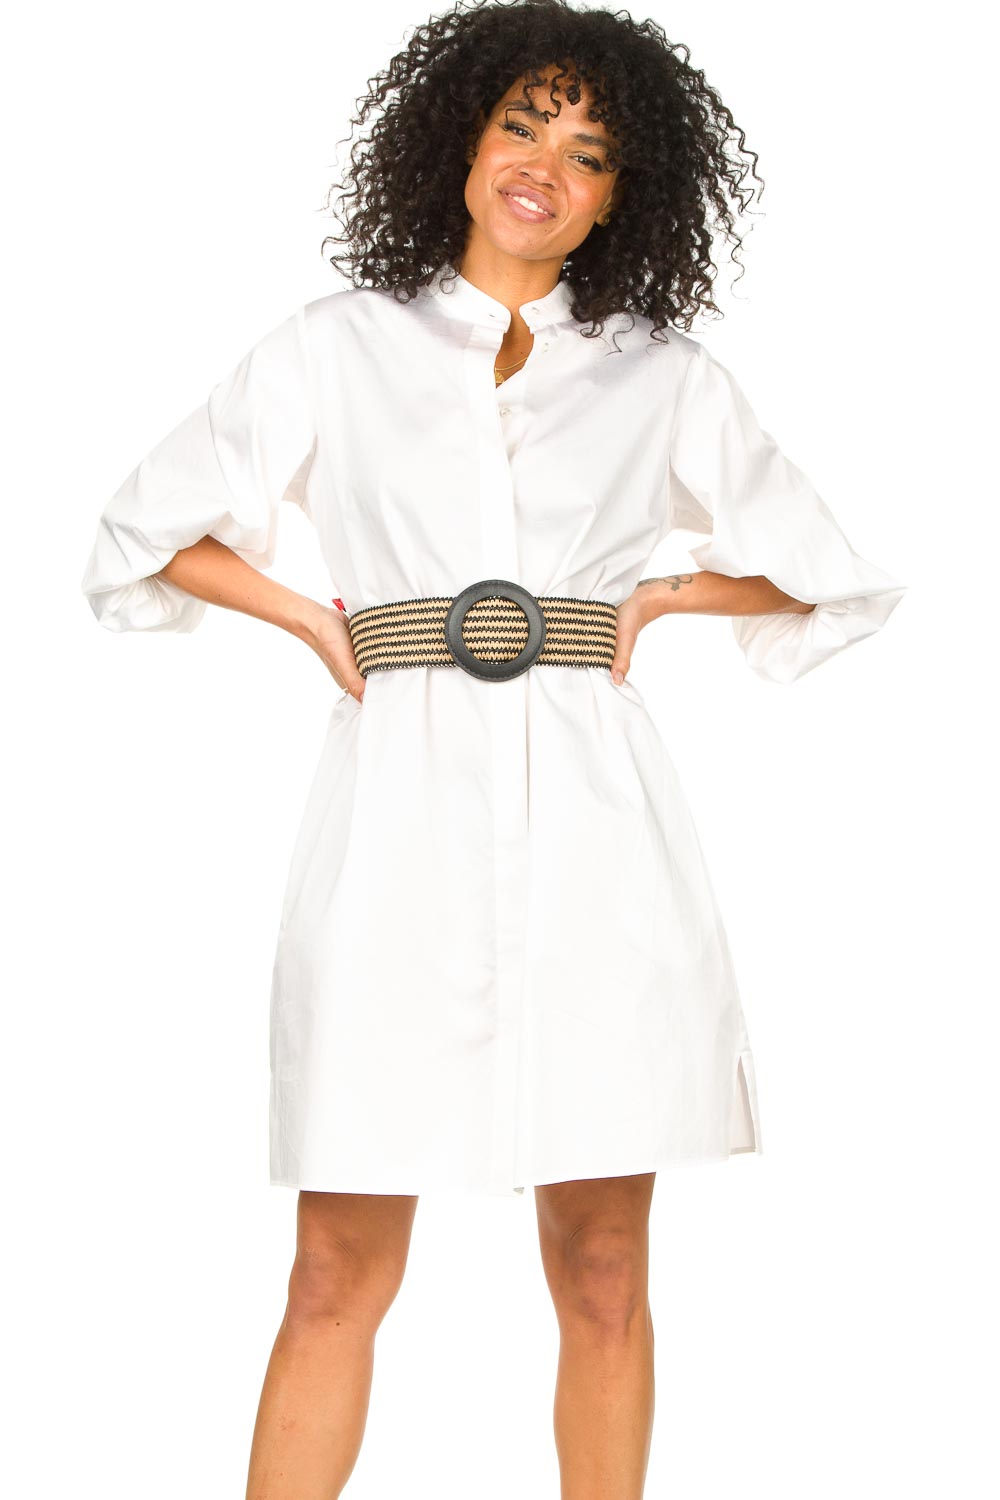 Reactor Ongehoorzaamheid dump Katoenen blouse jurk met tailleriem Tanushri | wit | Kocca | Little Soho